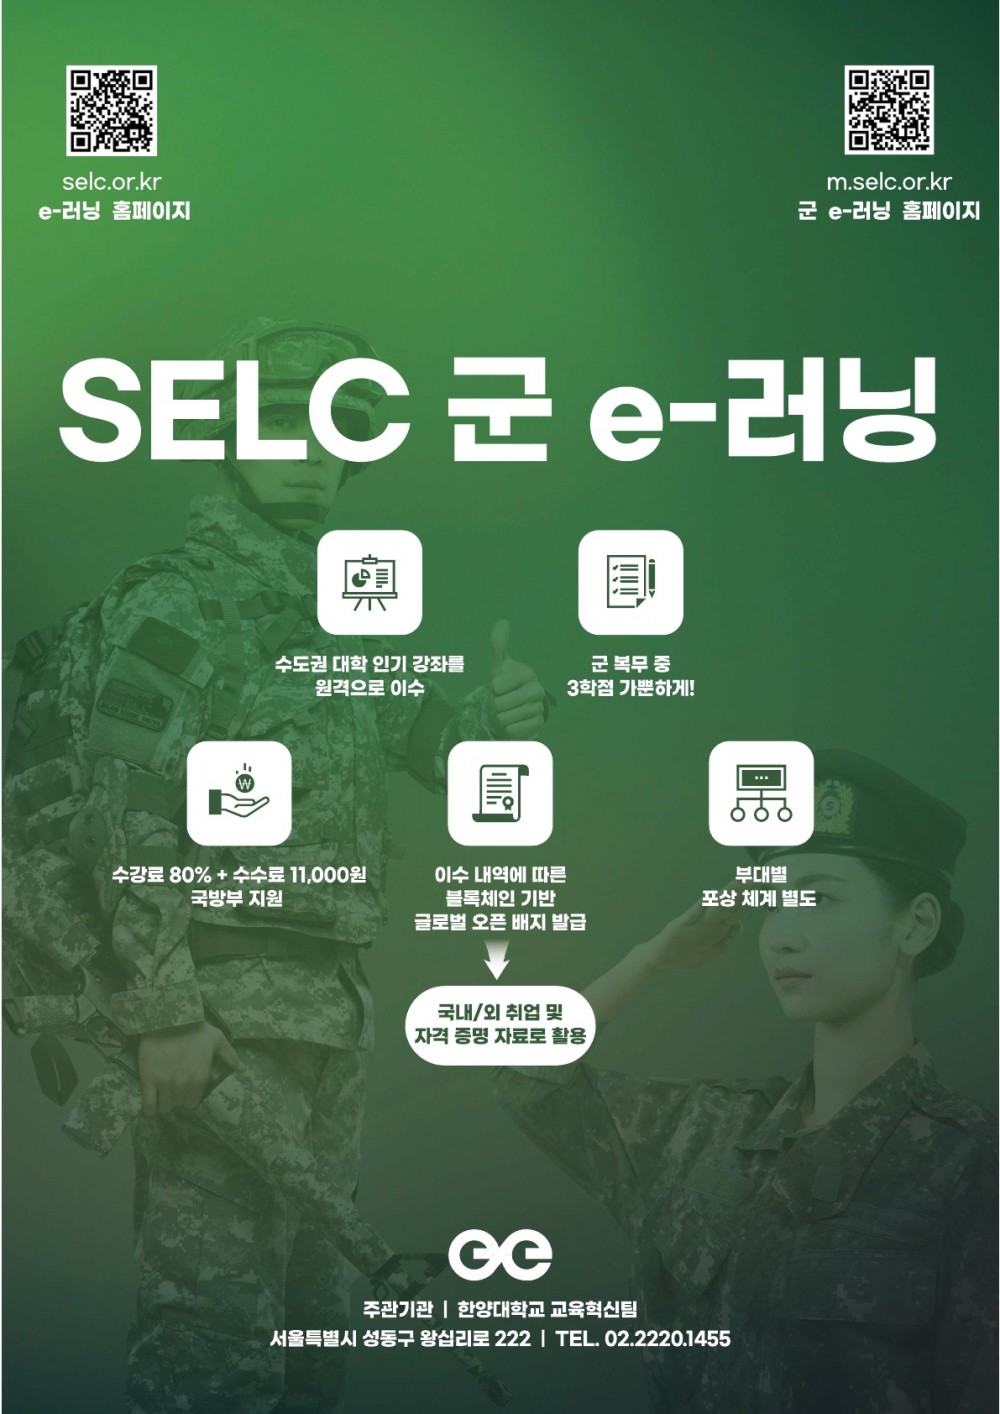 SELC 군 e러닝 학생용 홍보물_1